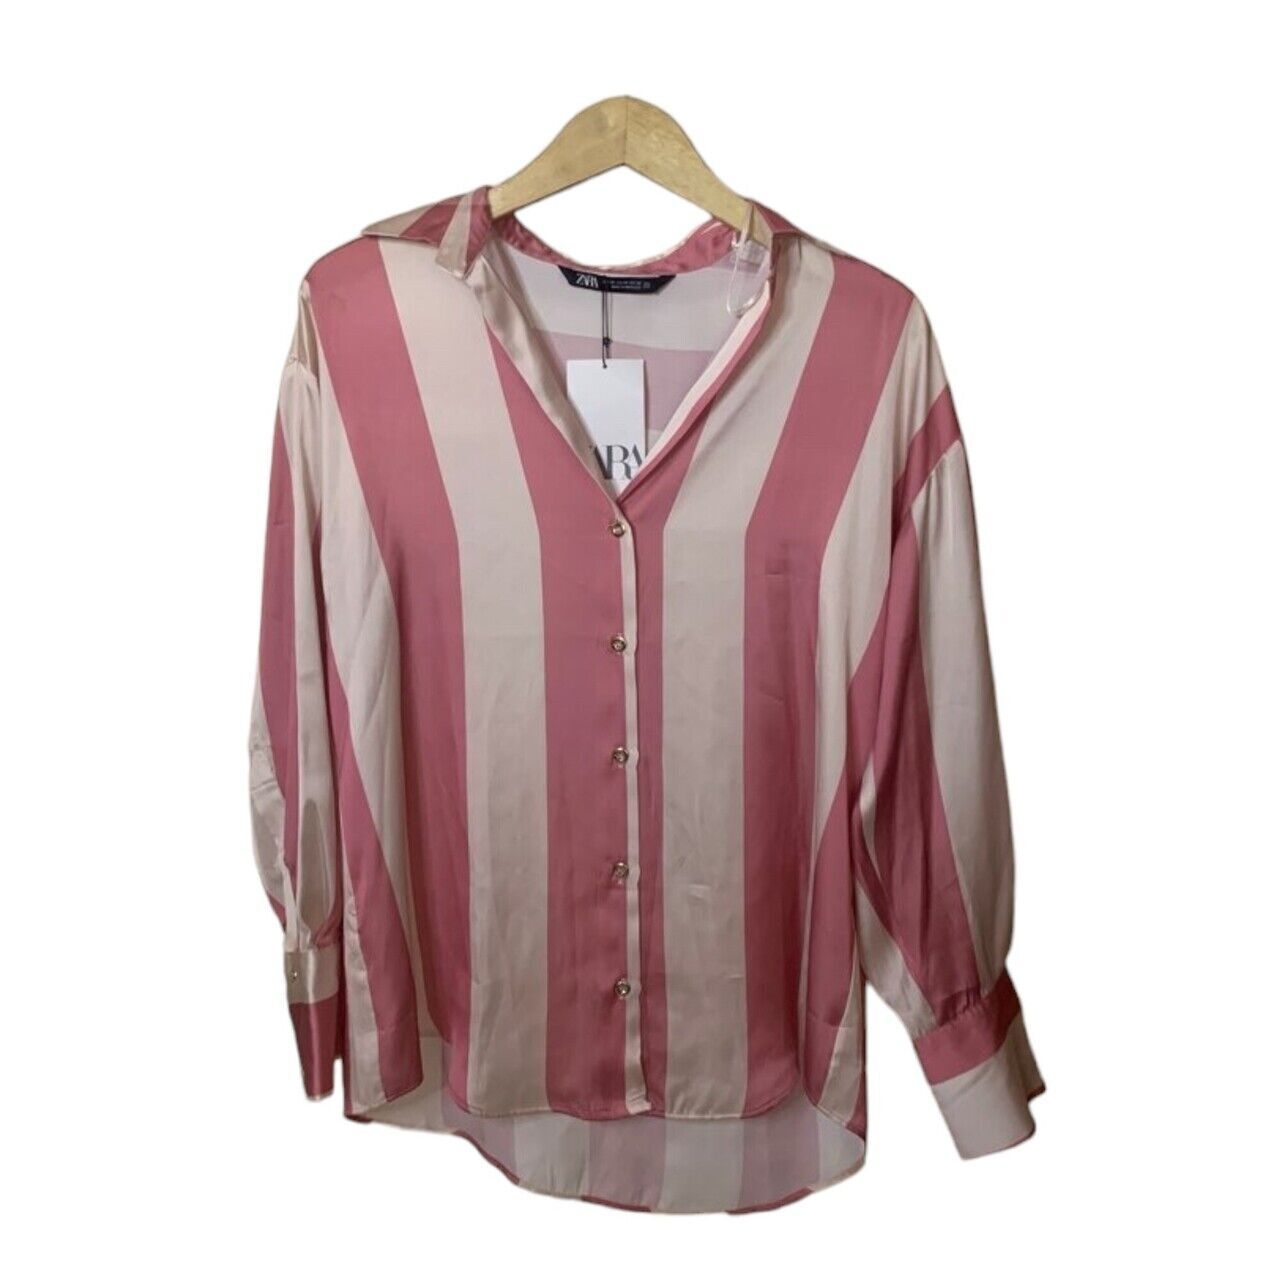 Zara Pink & White Stripes Shirt